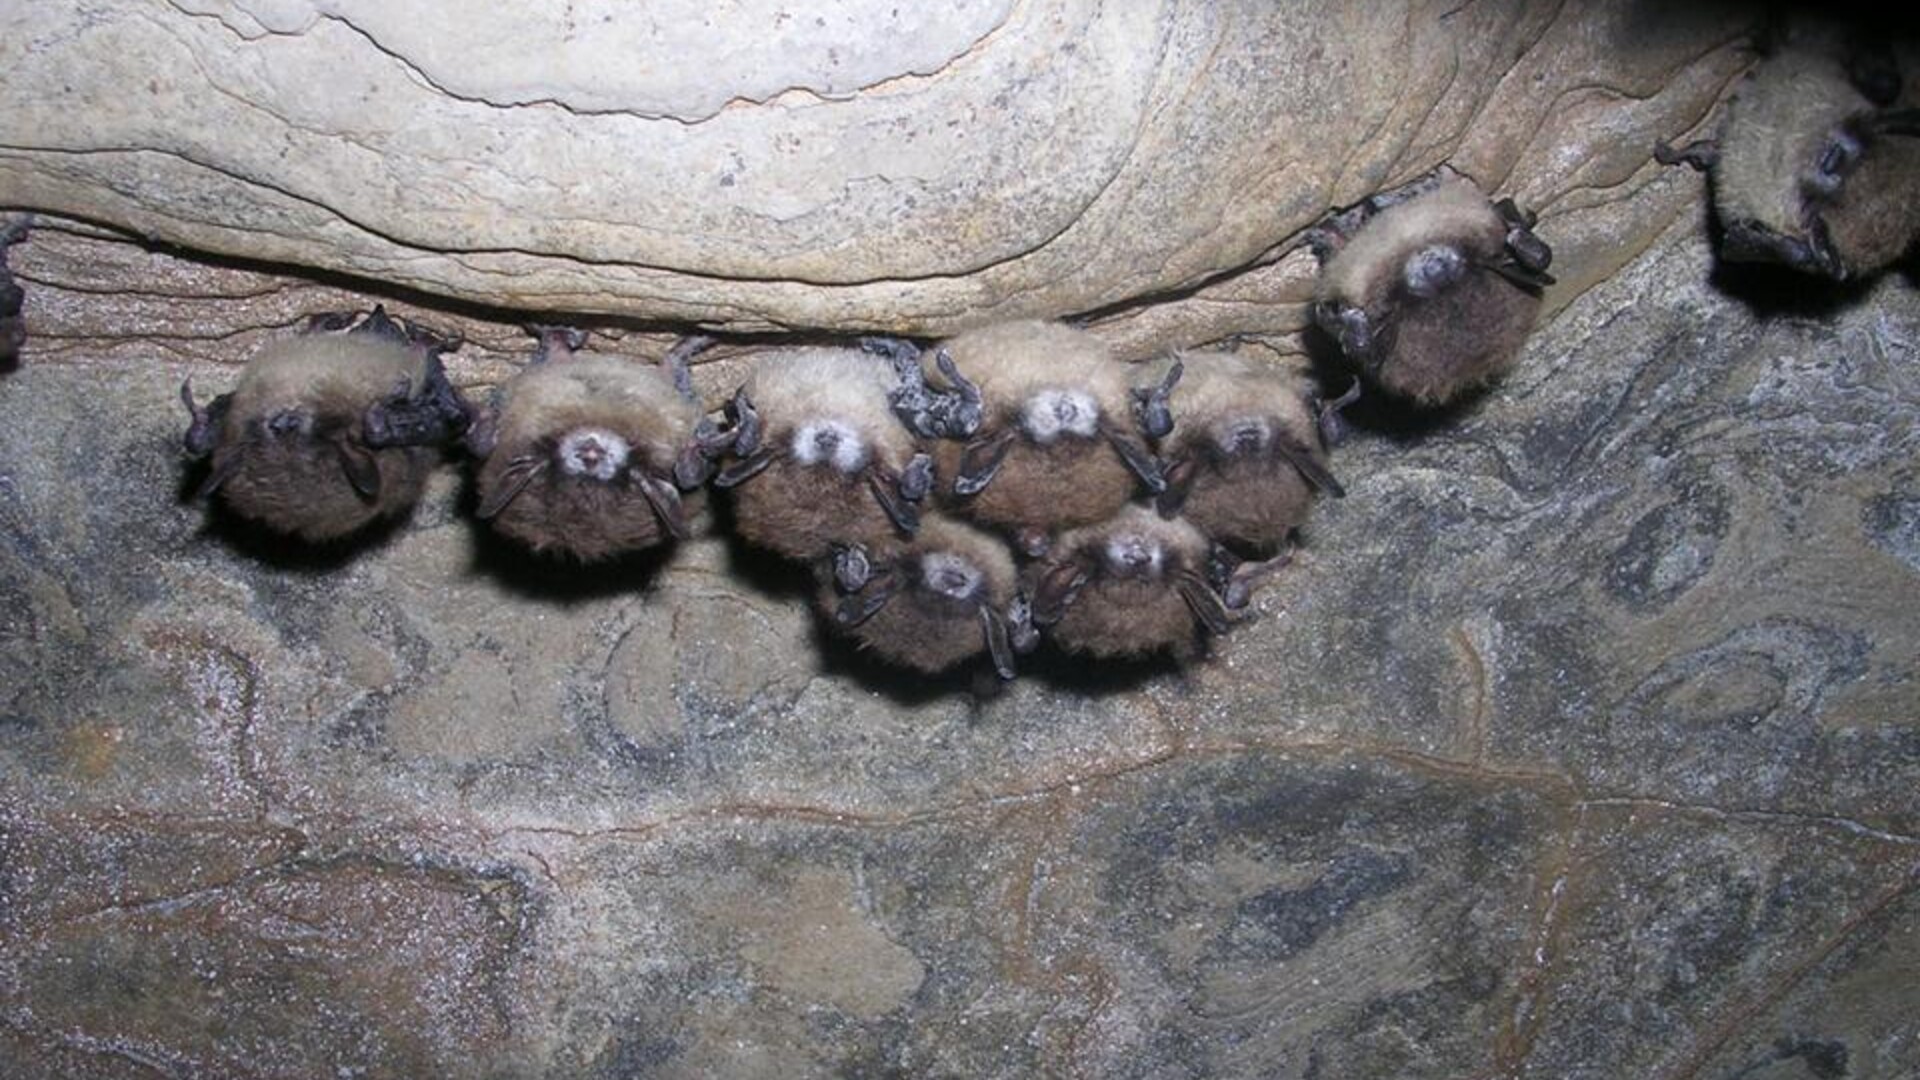 Fungal Bat Disease Costing U.S. Agriculture Millions